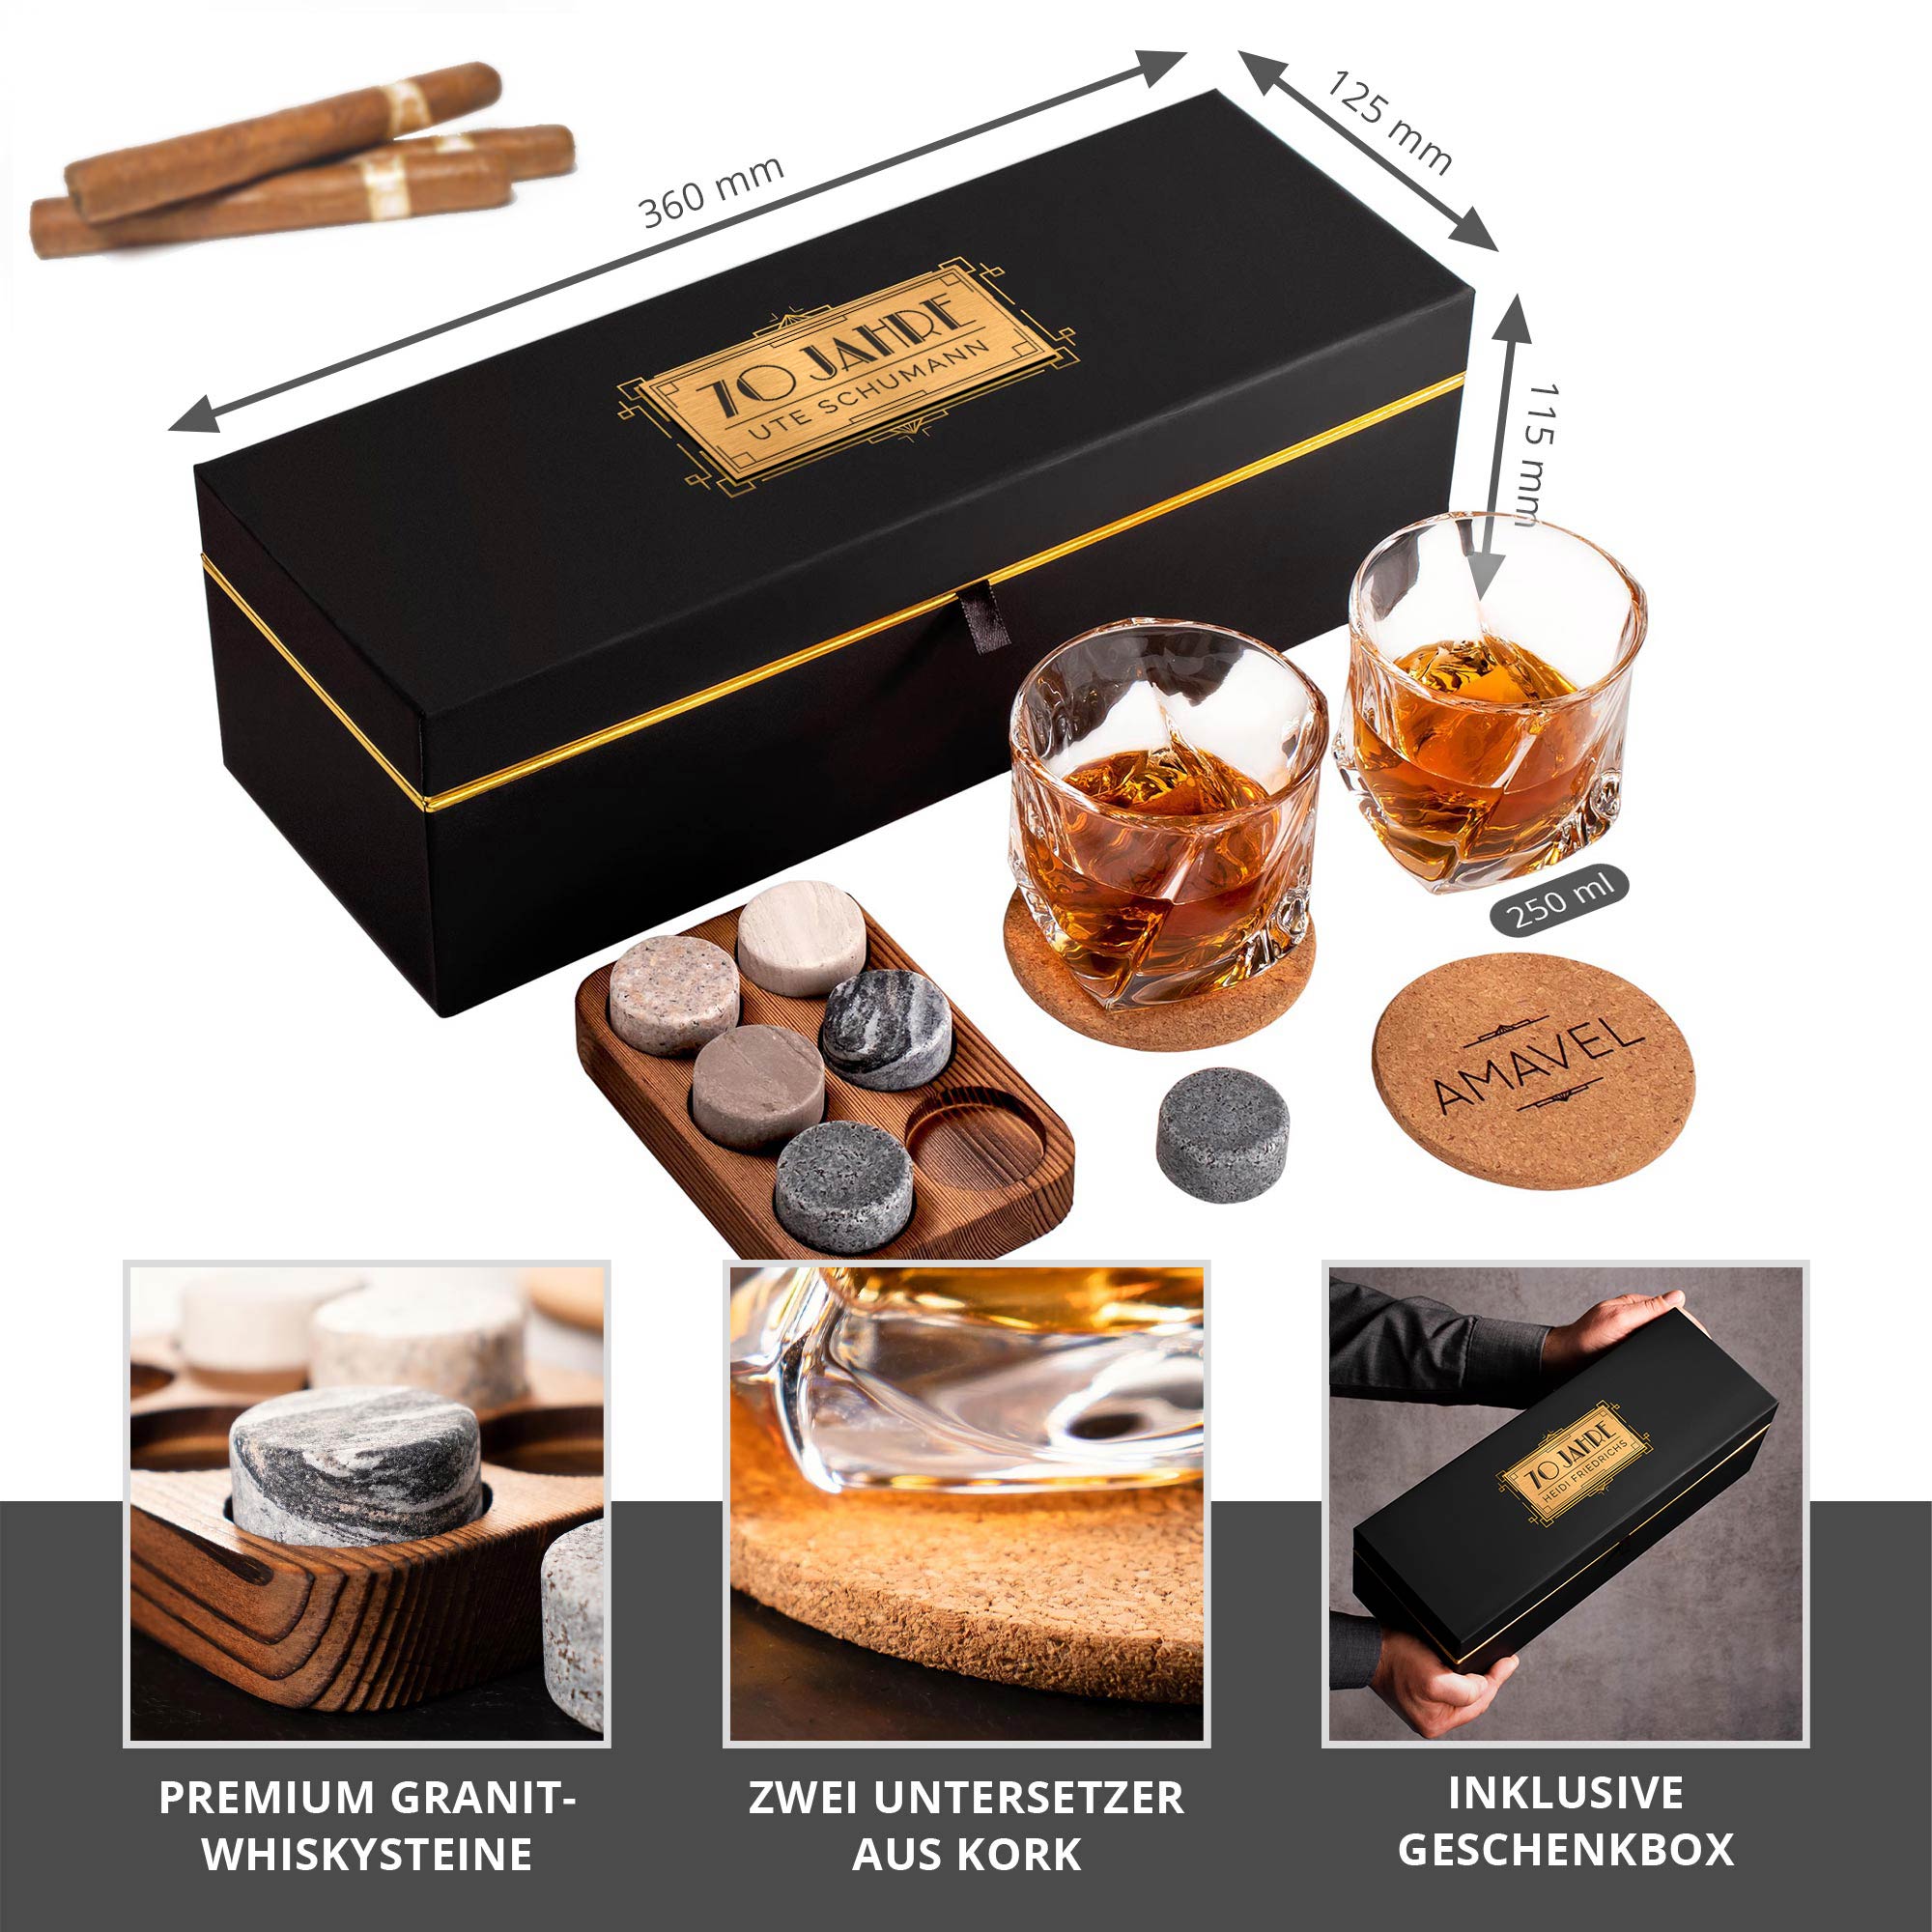 Whisky Set in edler Geschenkbox zum 70. Geburtstag 0021-0002-DE-0007 - 1